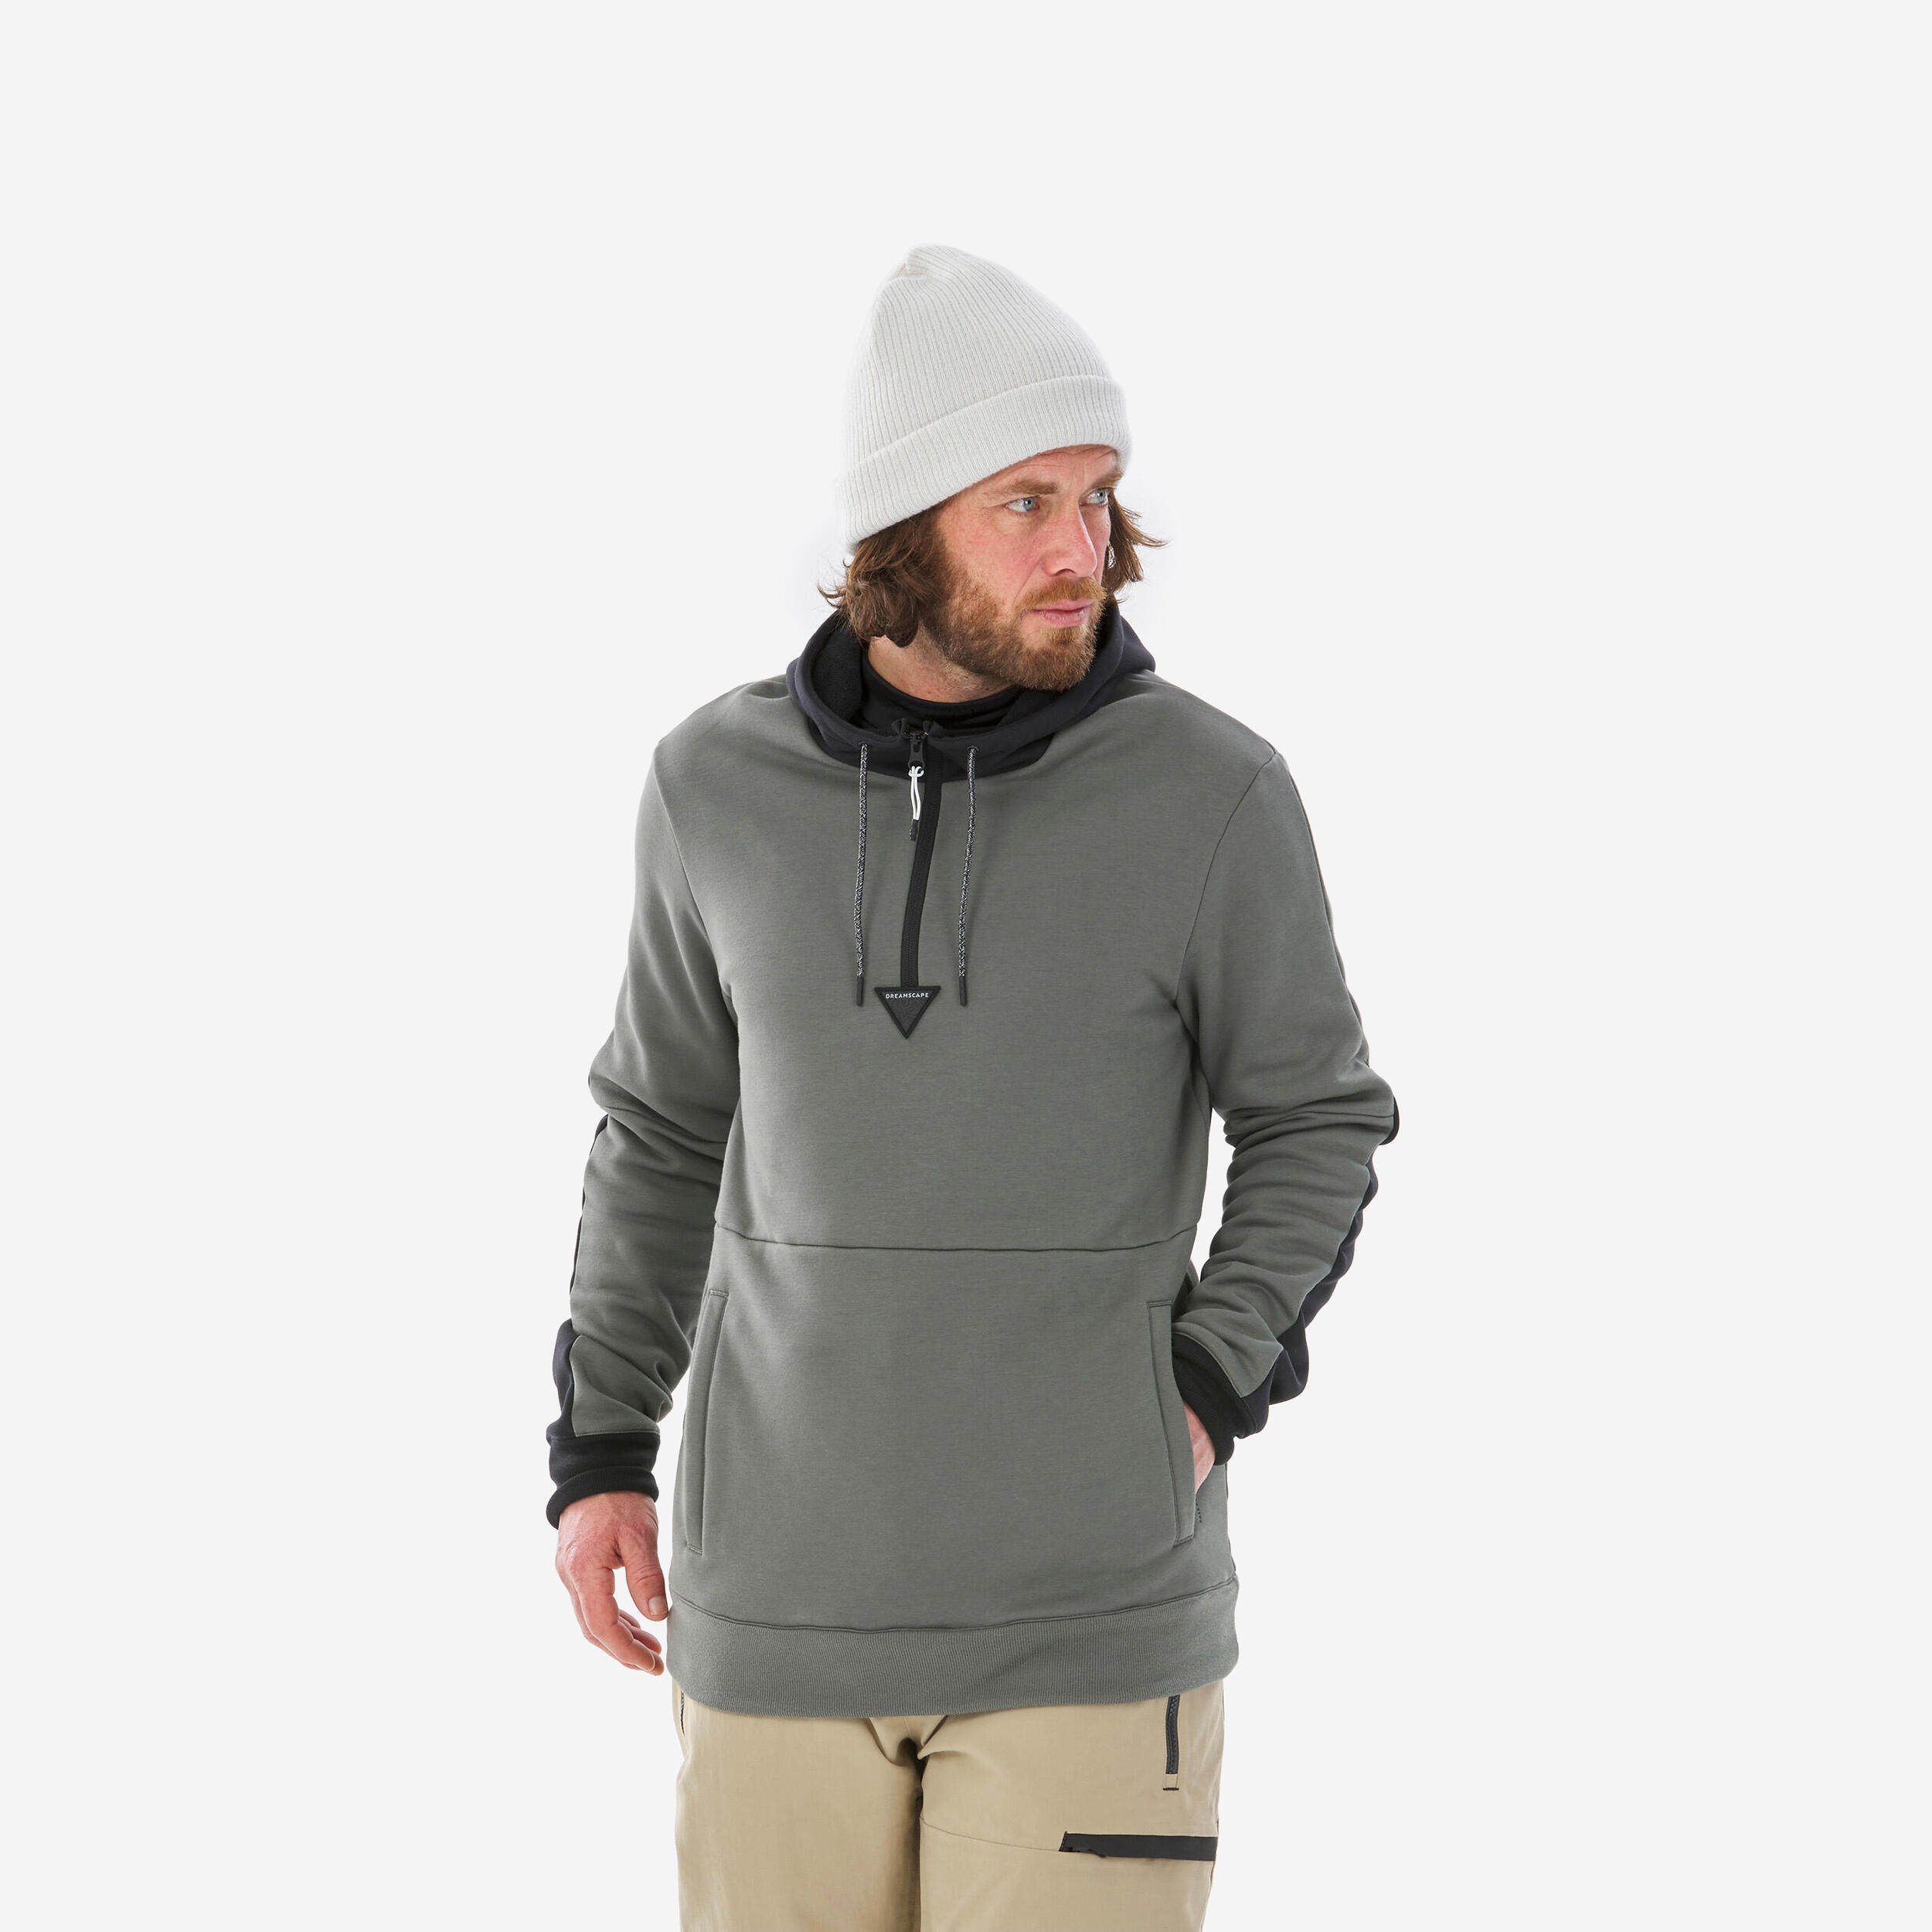 Men's Hooded Snowboard Sweatshirt - SNB HDY Khaki 1/9